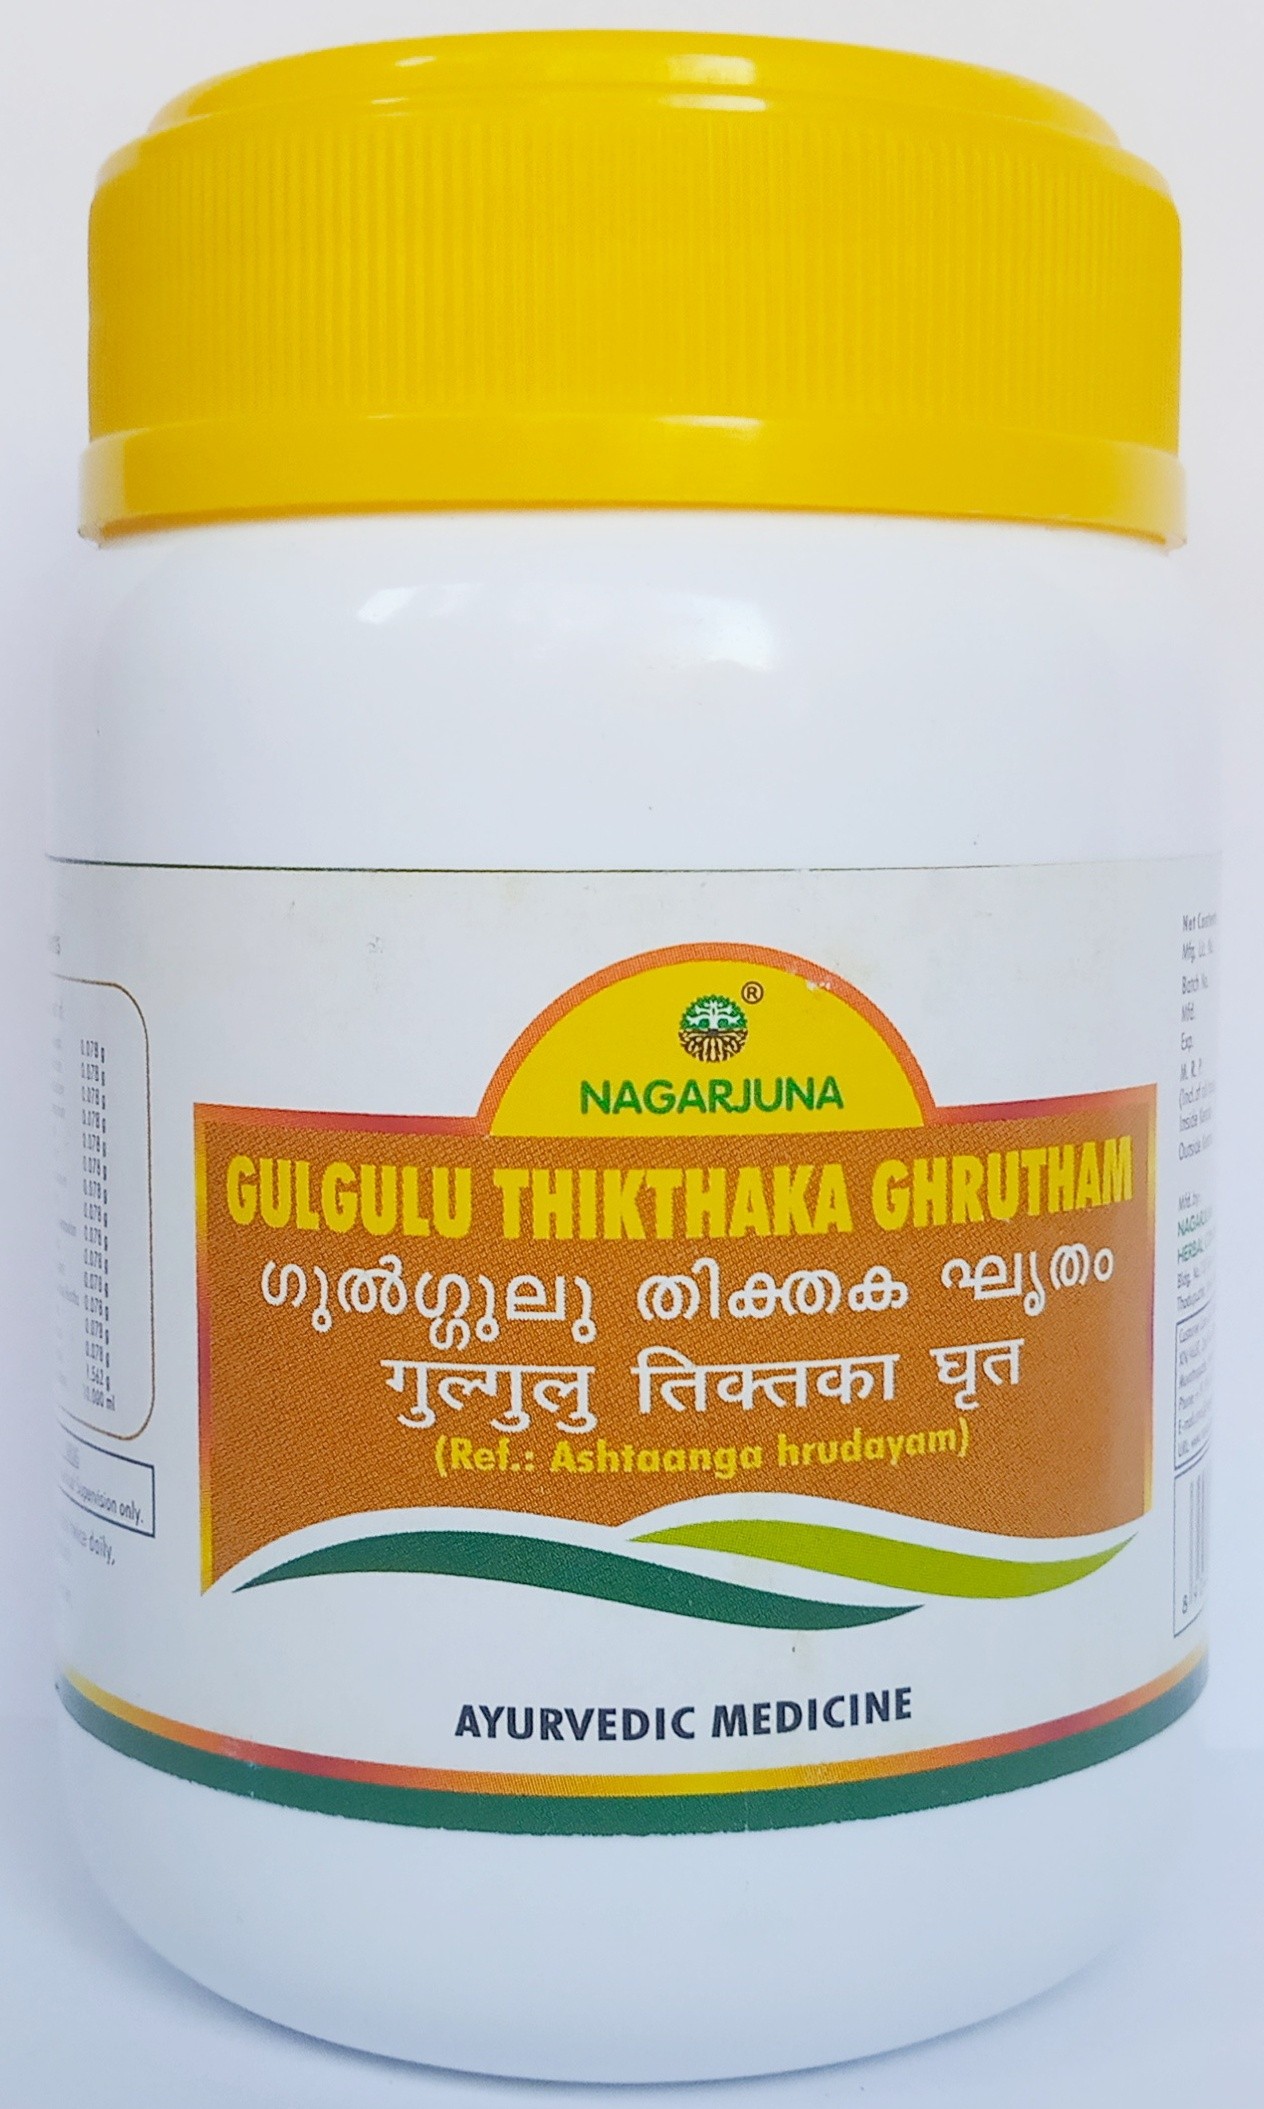 GULGULU THIKTHAKA GHRUTHAM, Nagarjuna (ГУЛГУЛУ ТИКТАКА ГРУТАМ, лечение болезней кожи и суставов, Нагарджуна), 200 мл.